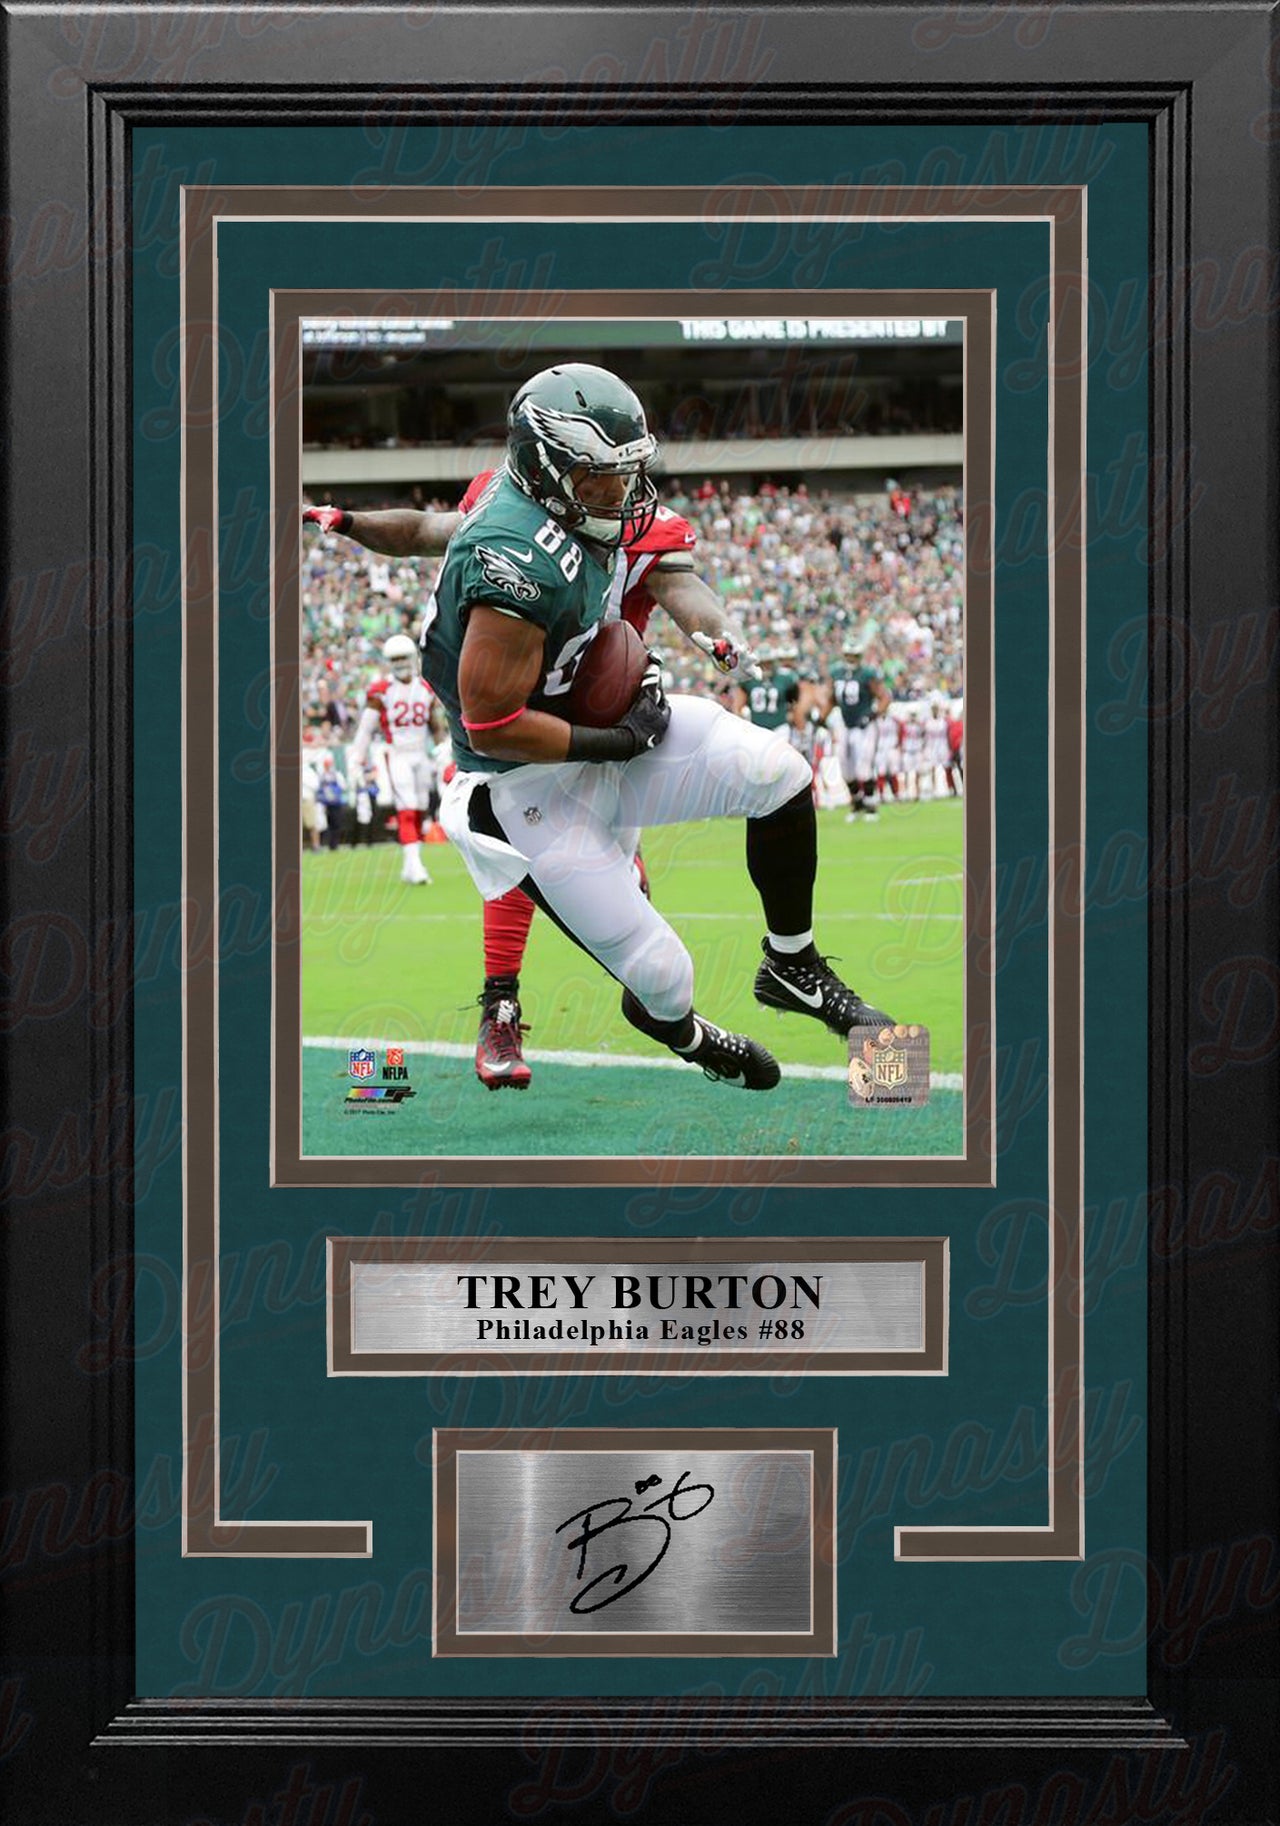 Trey Burton Touchdown Catch Philadelphia Eagles Framed Football Photo with Engraved Autograph - Dynasty Sports & Framing 